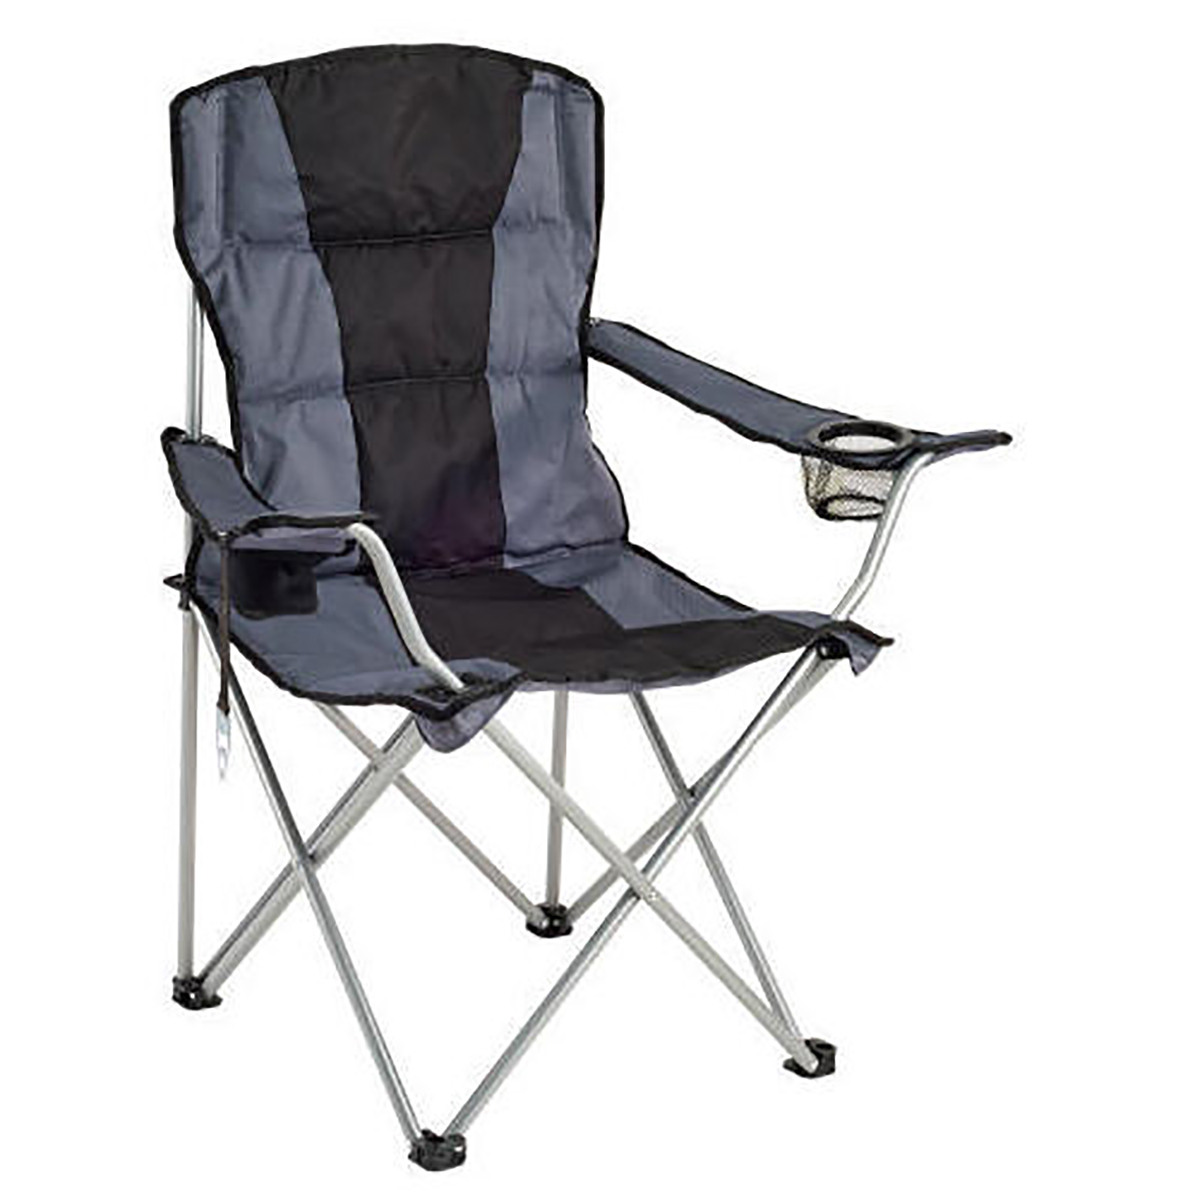 Premium Black Stripe Lawn Chair For The Home John Deere Products Johndeerestore